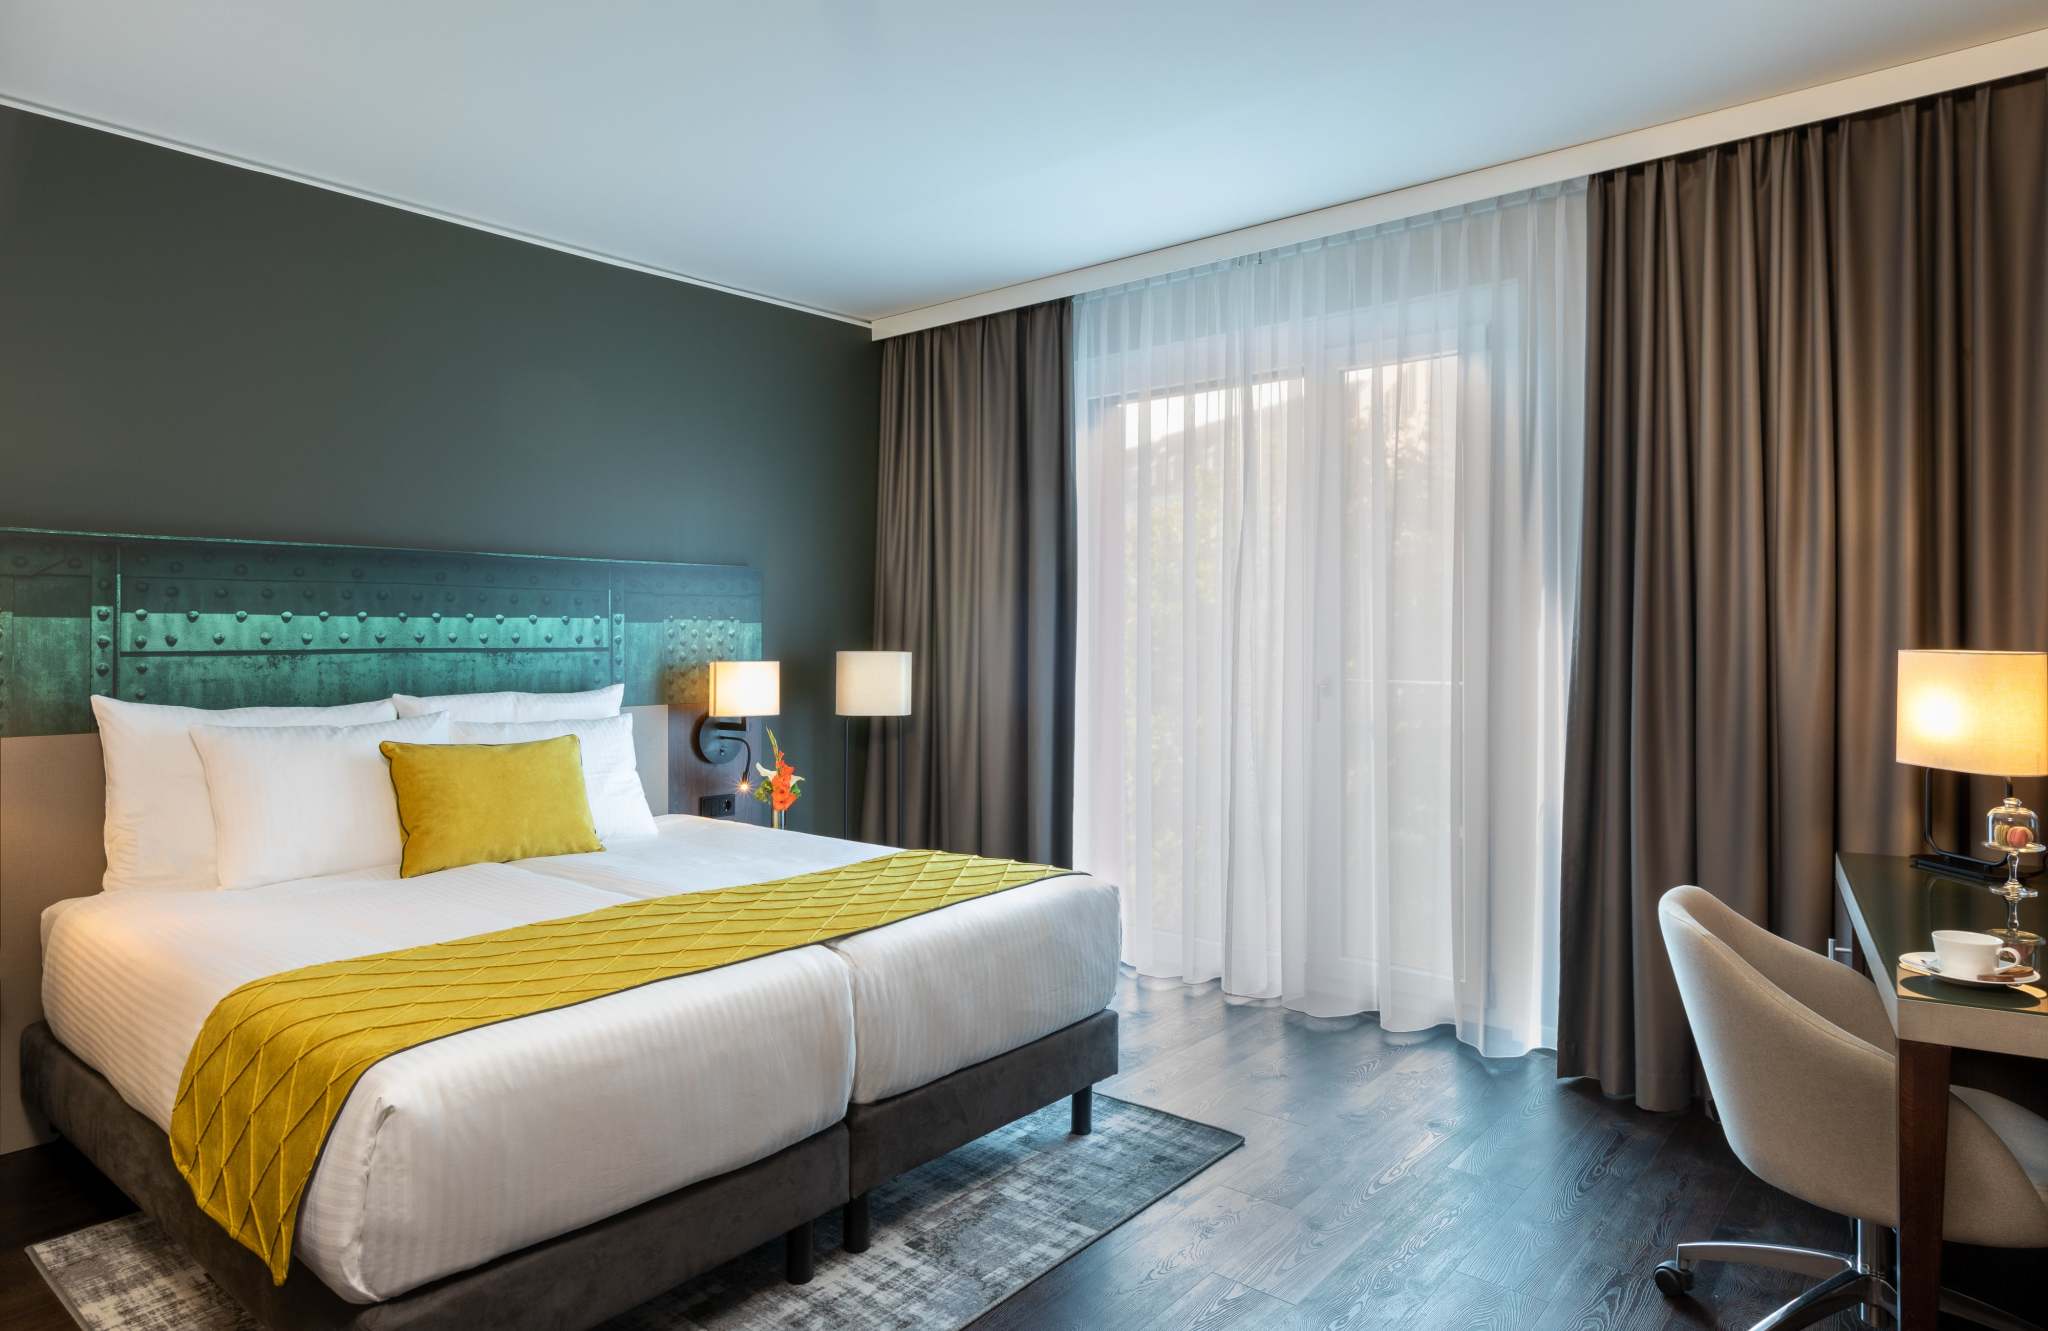 Leonardo Hotel Dortmund - Comfort Room